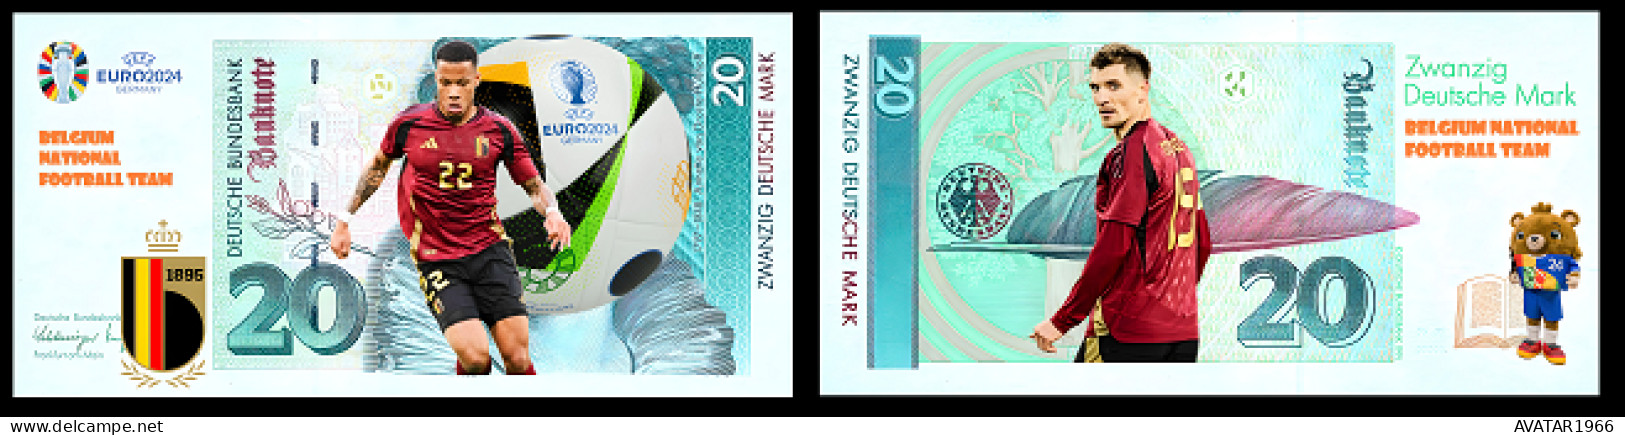 UEFA European Football Championship 2024 Qualified Country  Belgium 8 Pieces Germany Fantasy Paper Money - Gedenkausgaben